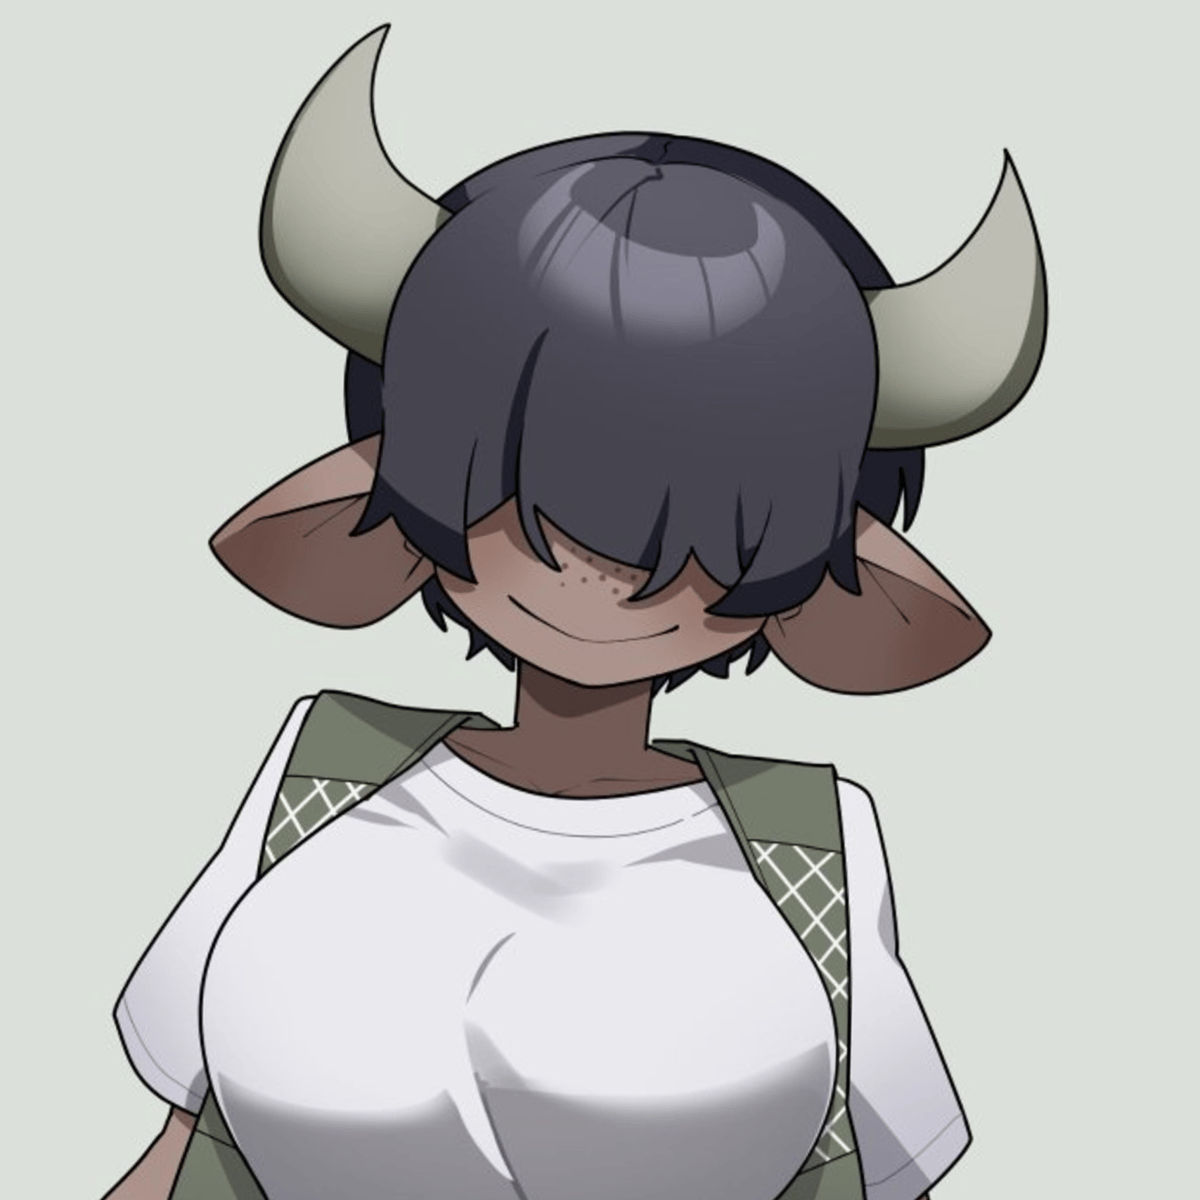 Bison Monster Girl